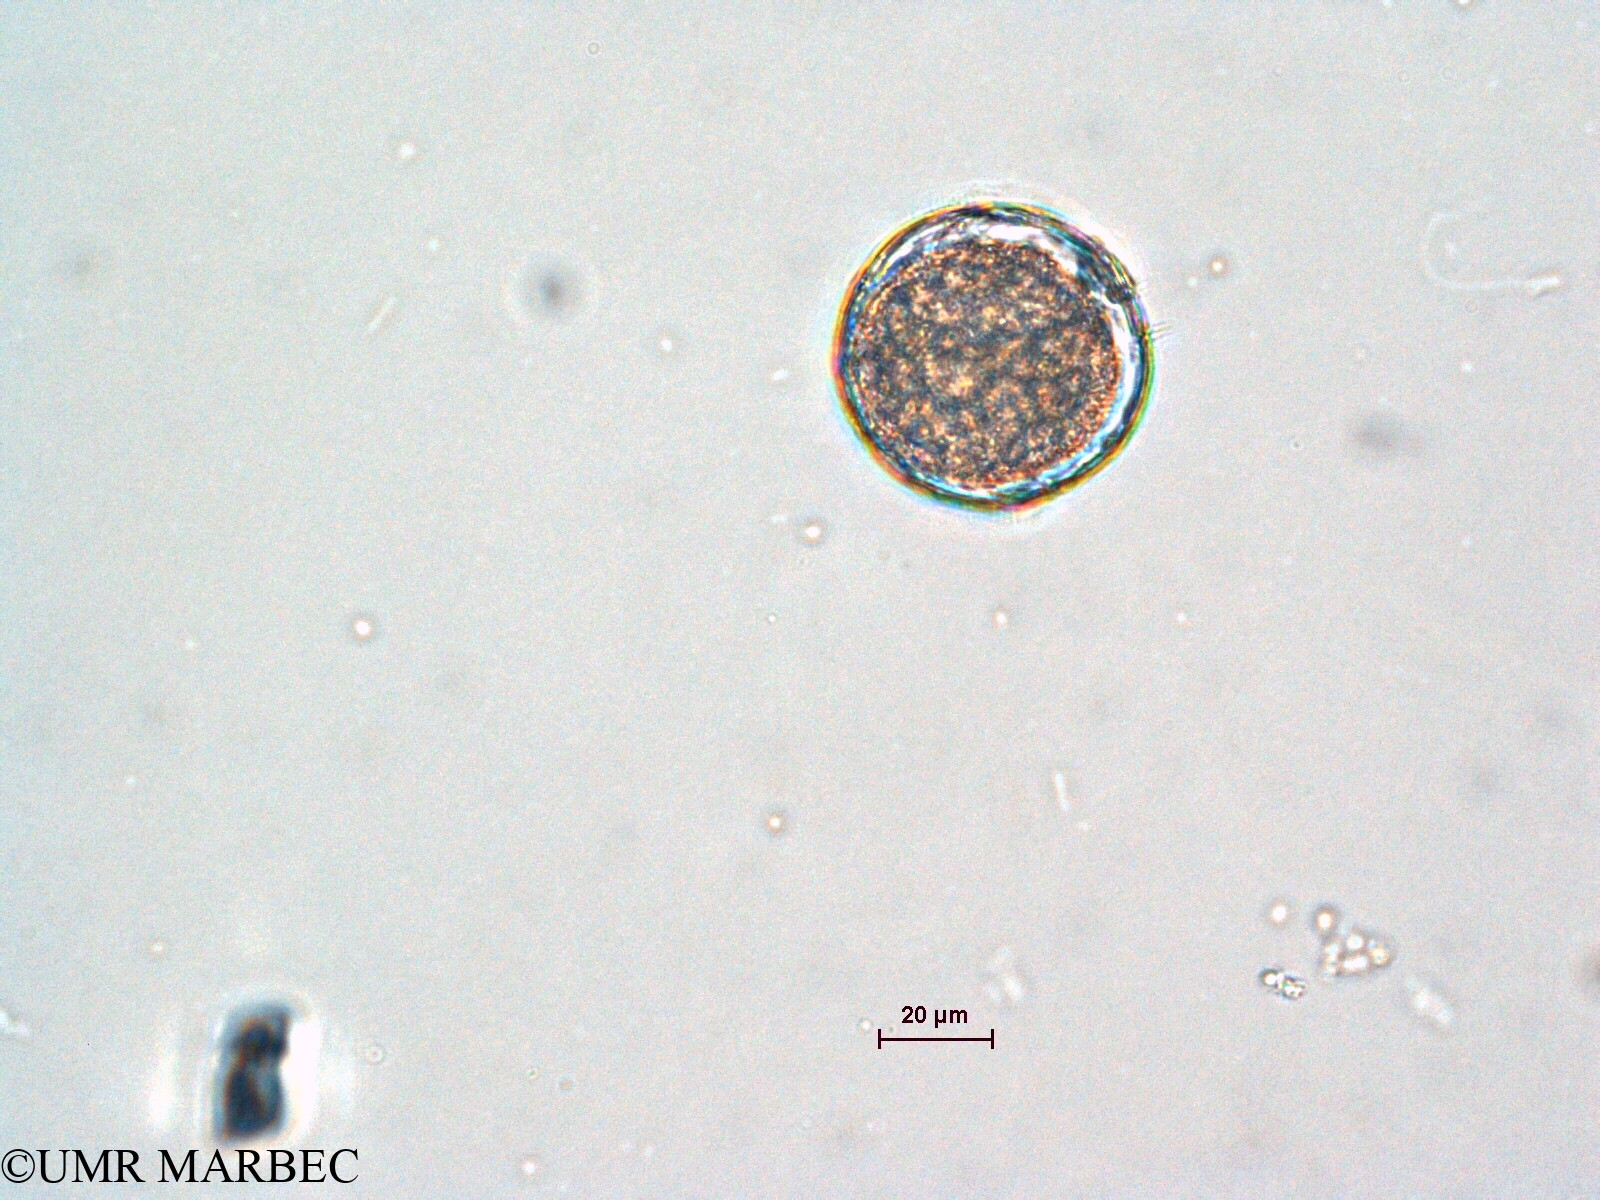 phyto/Scattered_Islands/all/COMMA April 2011/Protoperidinium sp11  (ancien Protoperidinium sp5 recomposé)(copy).jpg